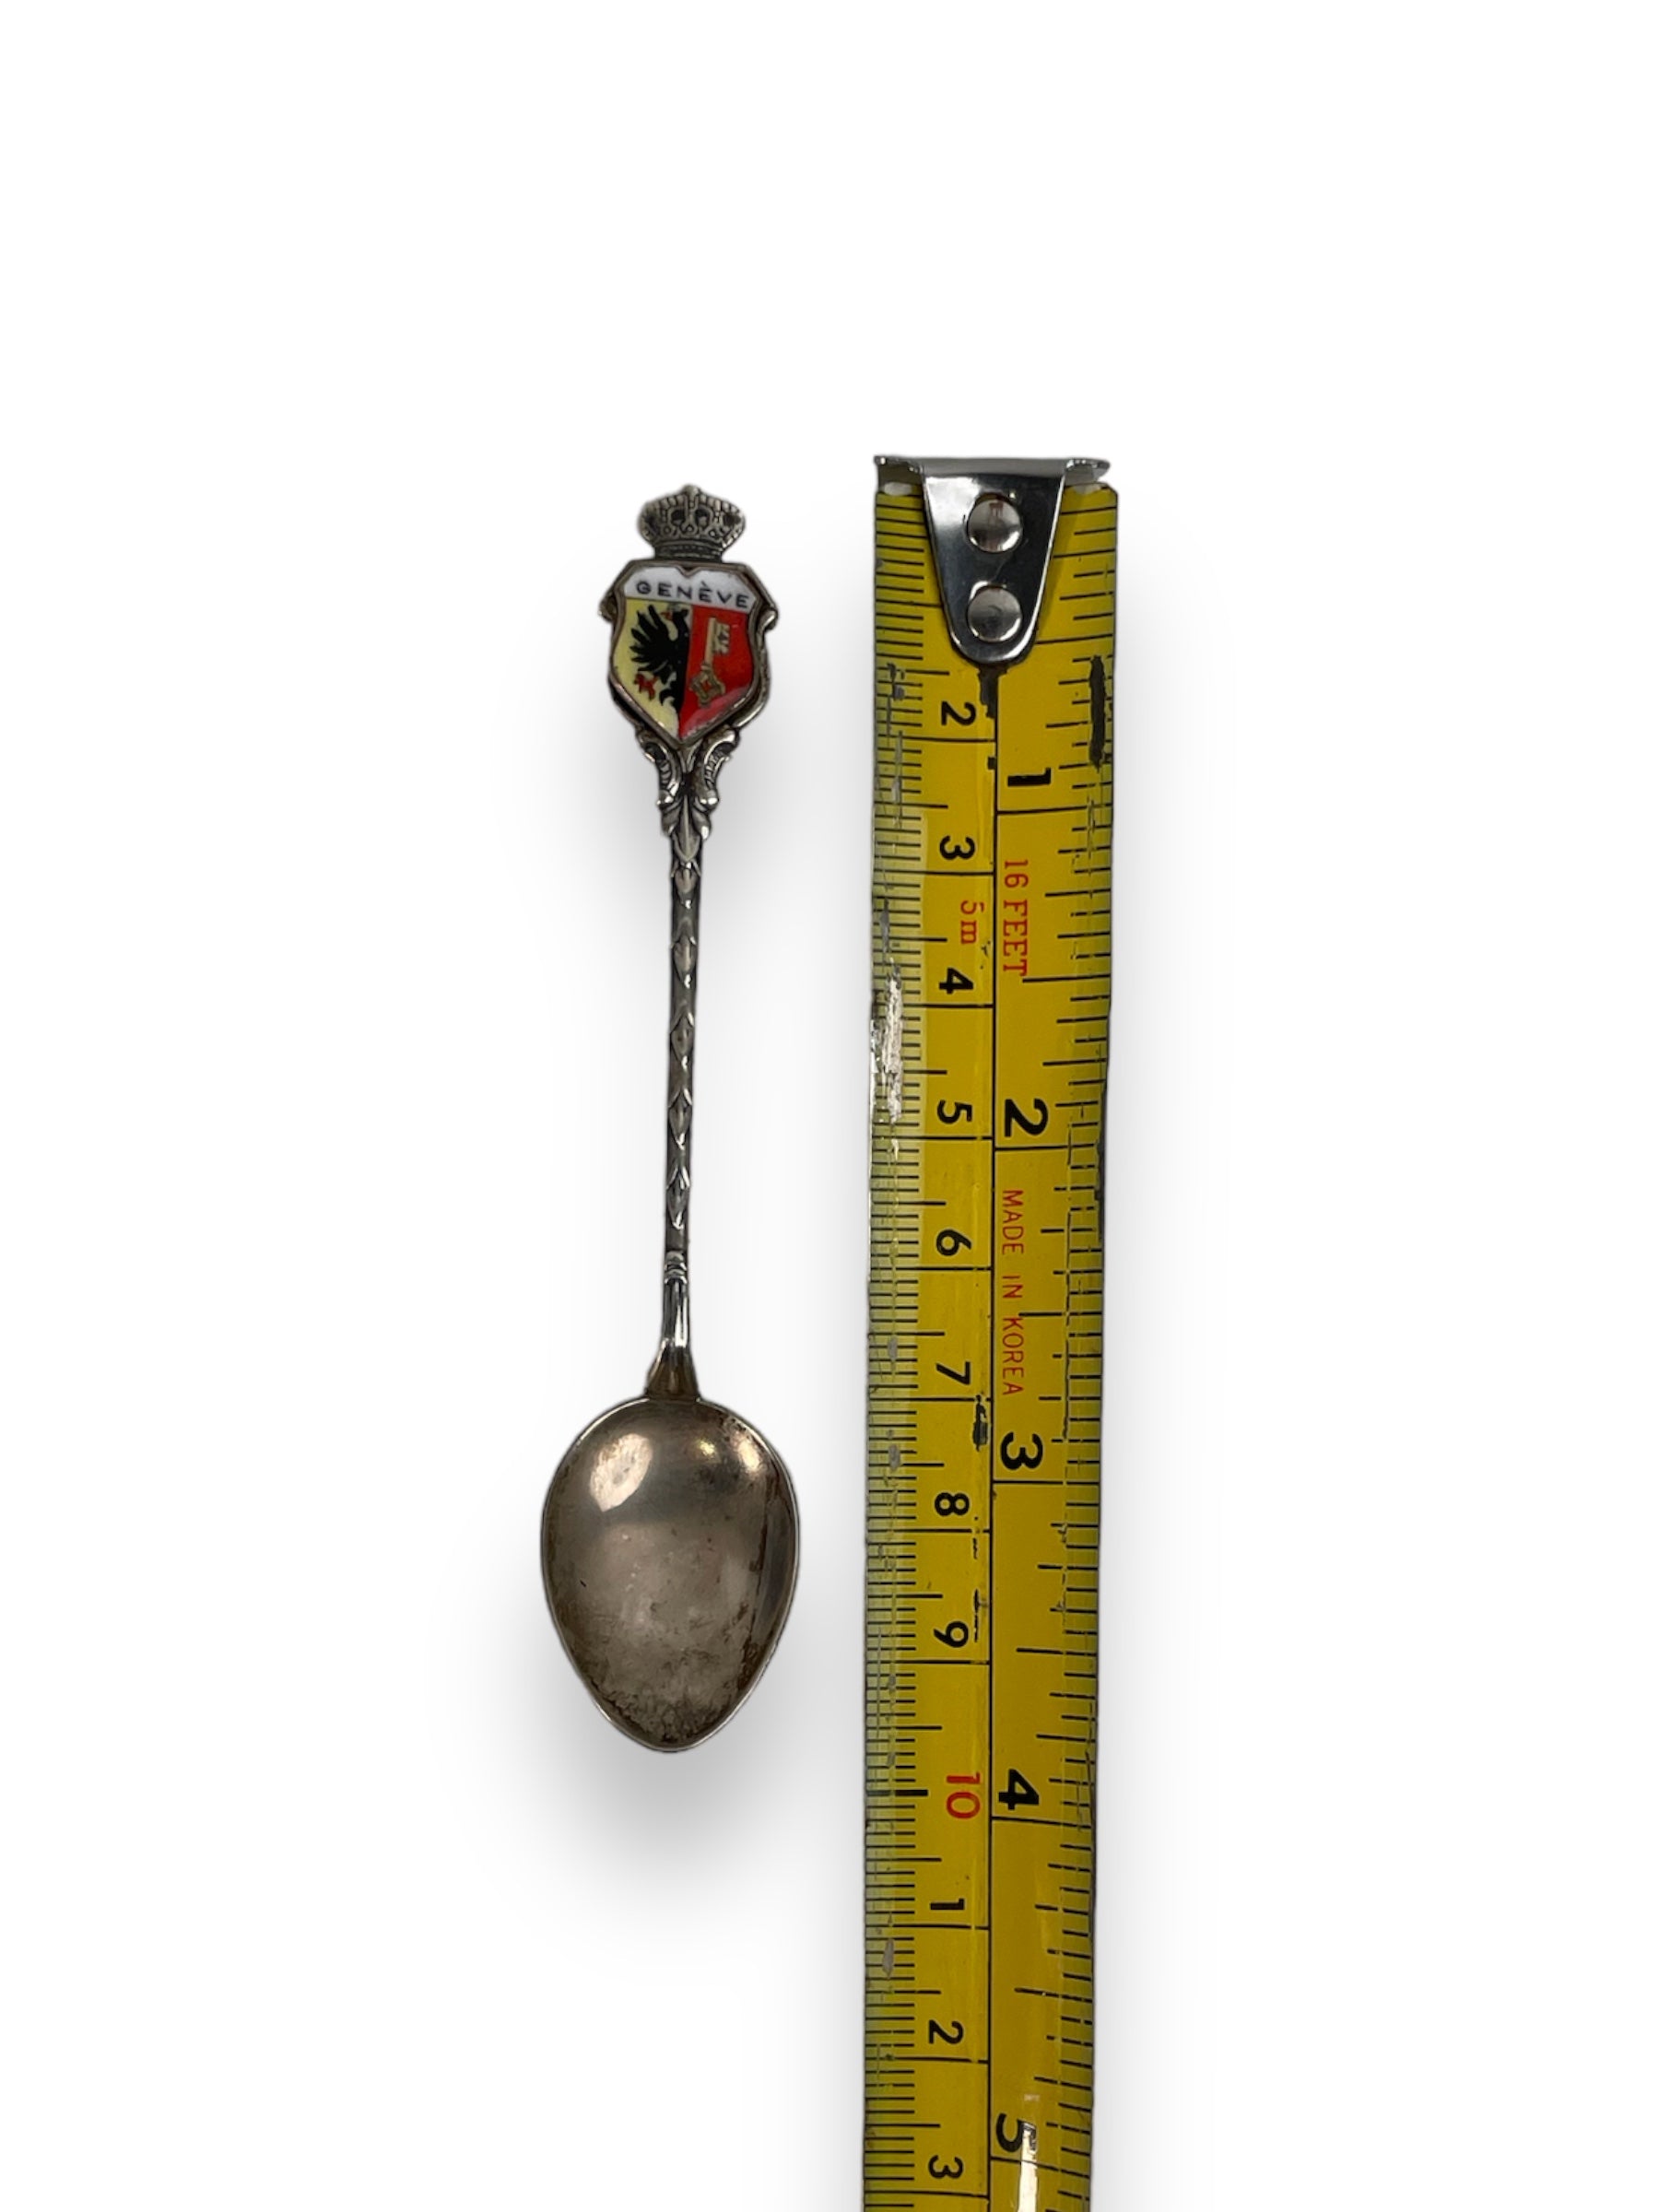 Vintage Souvenir Spoon Collectible from Genève - 80% Silver